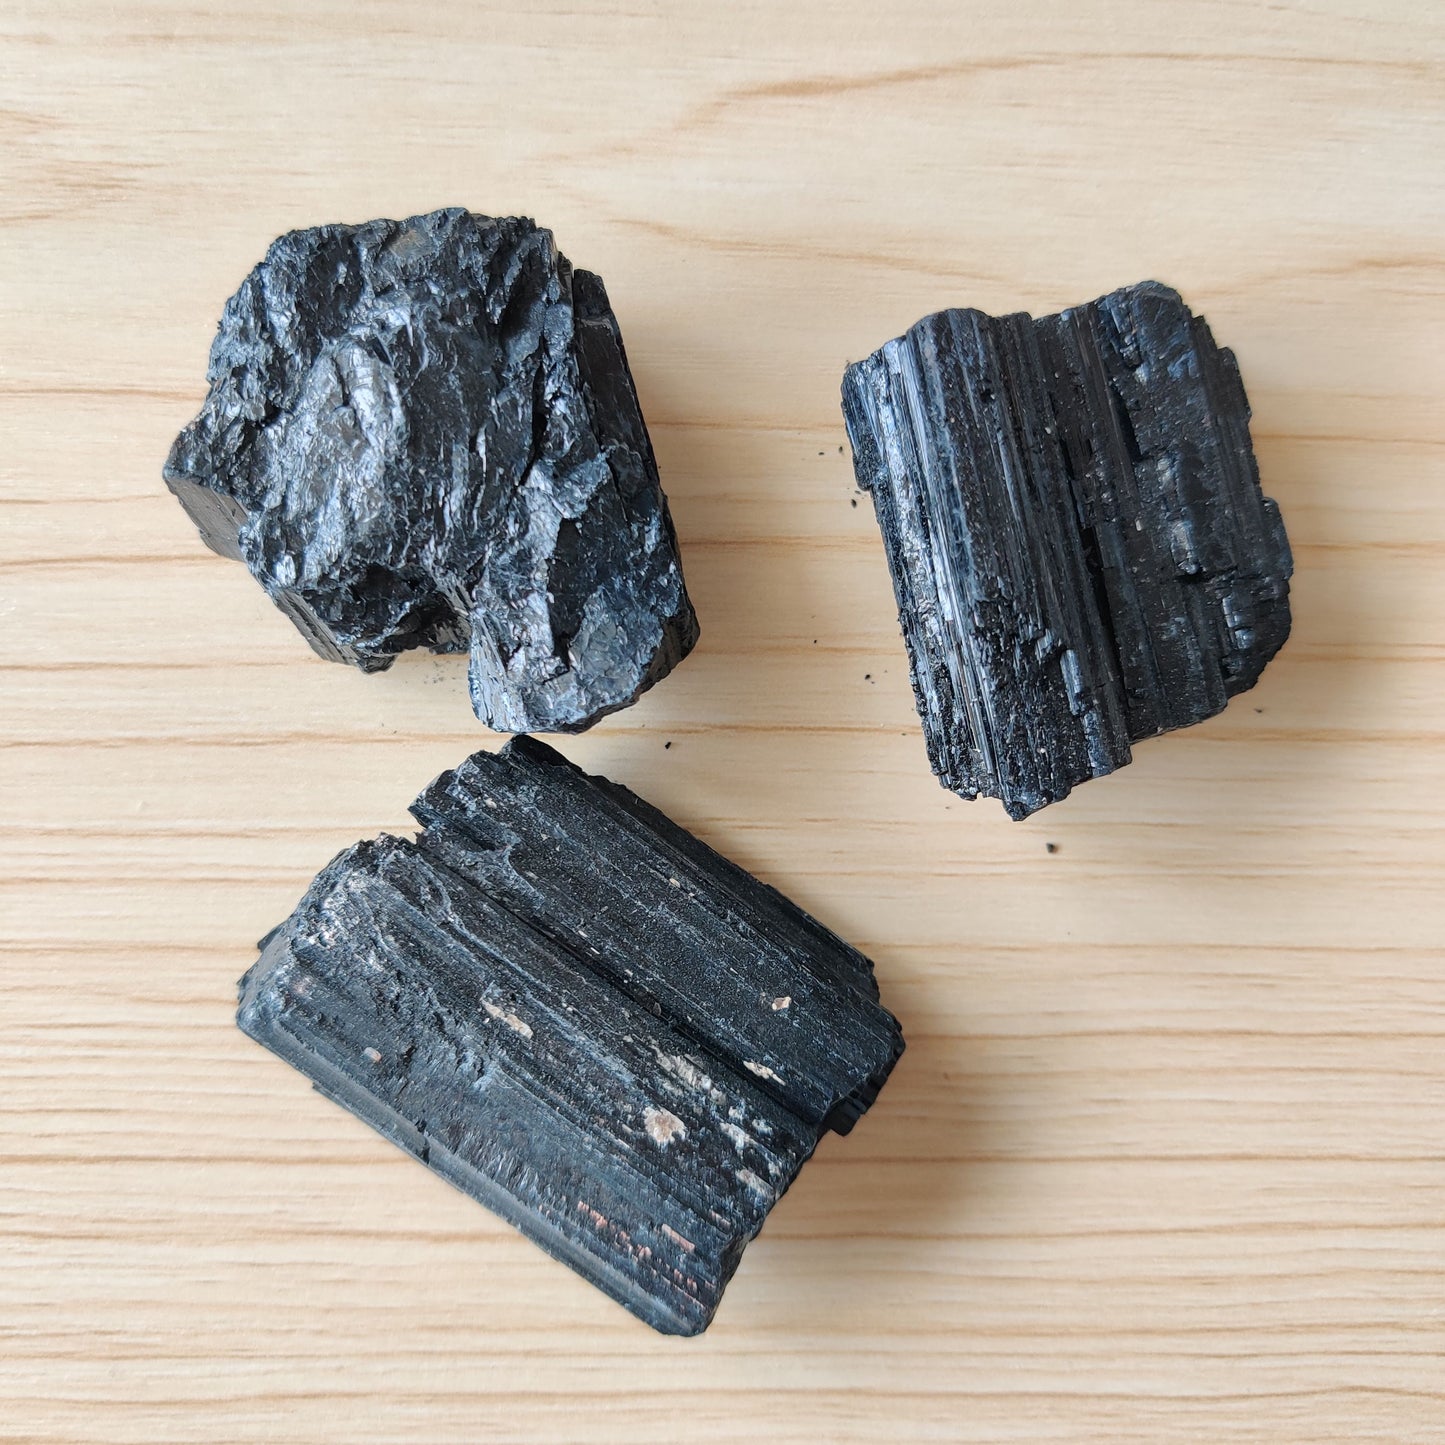 Black Tourmaline Crystal Piece (3-5 cm) - Rivendell Shop